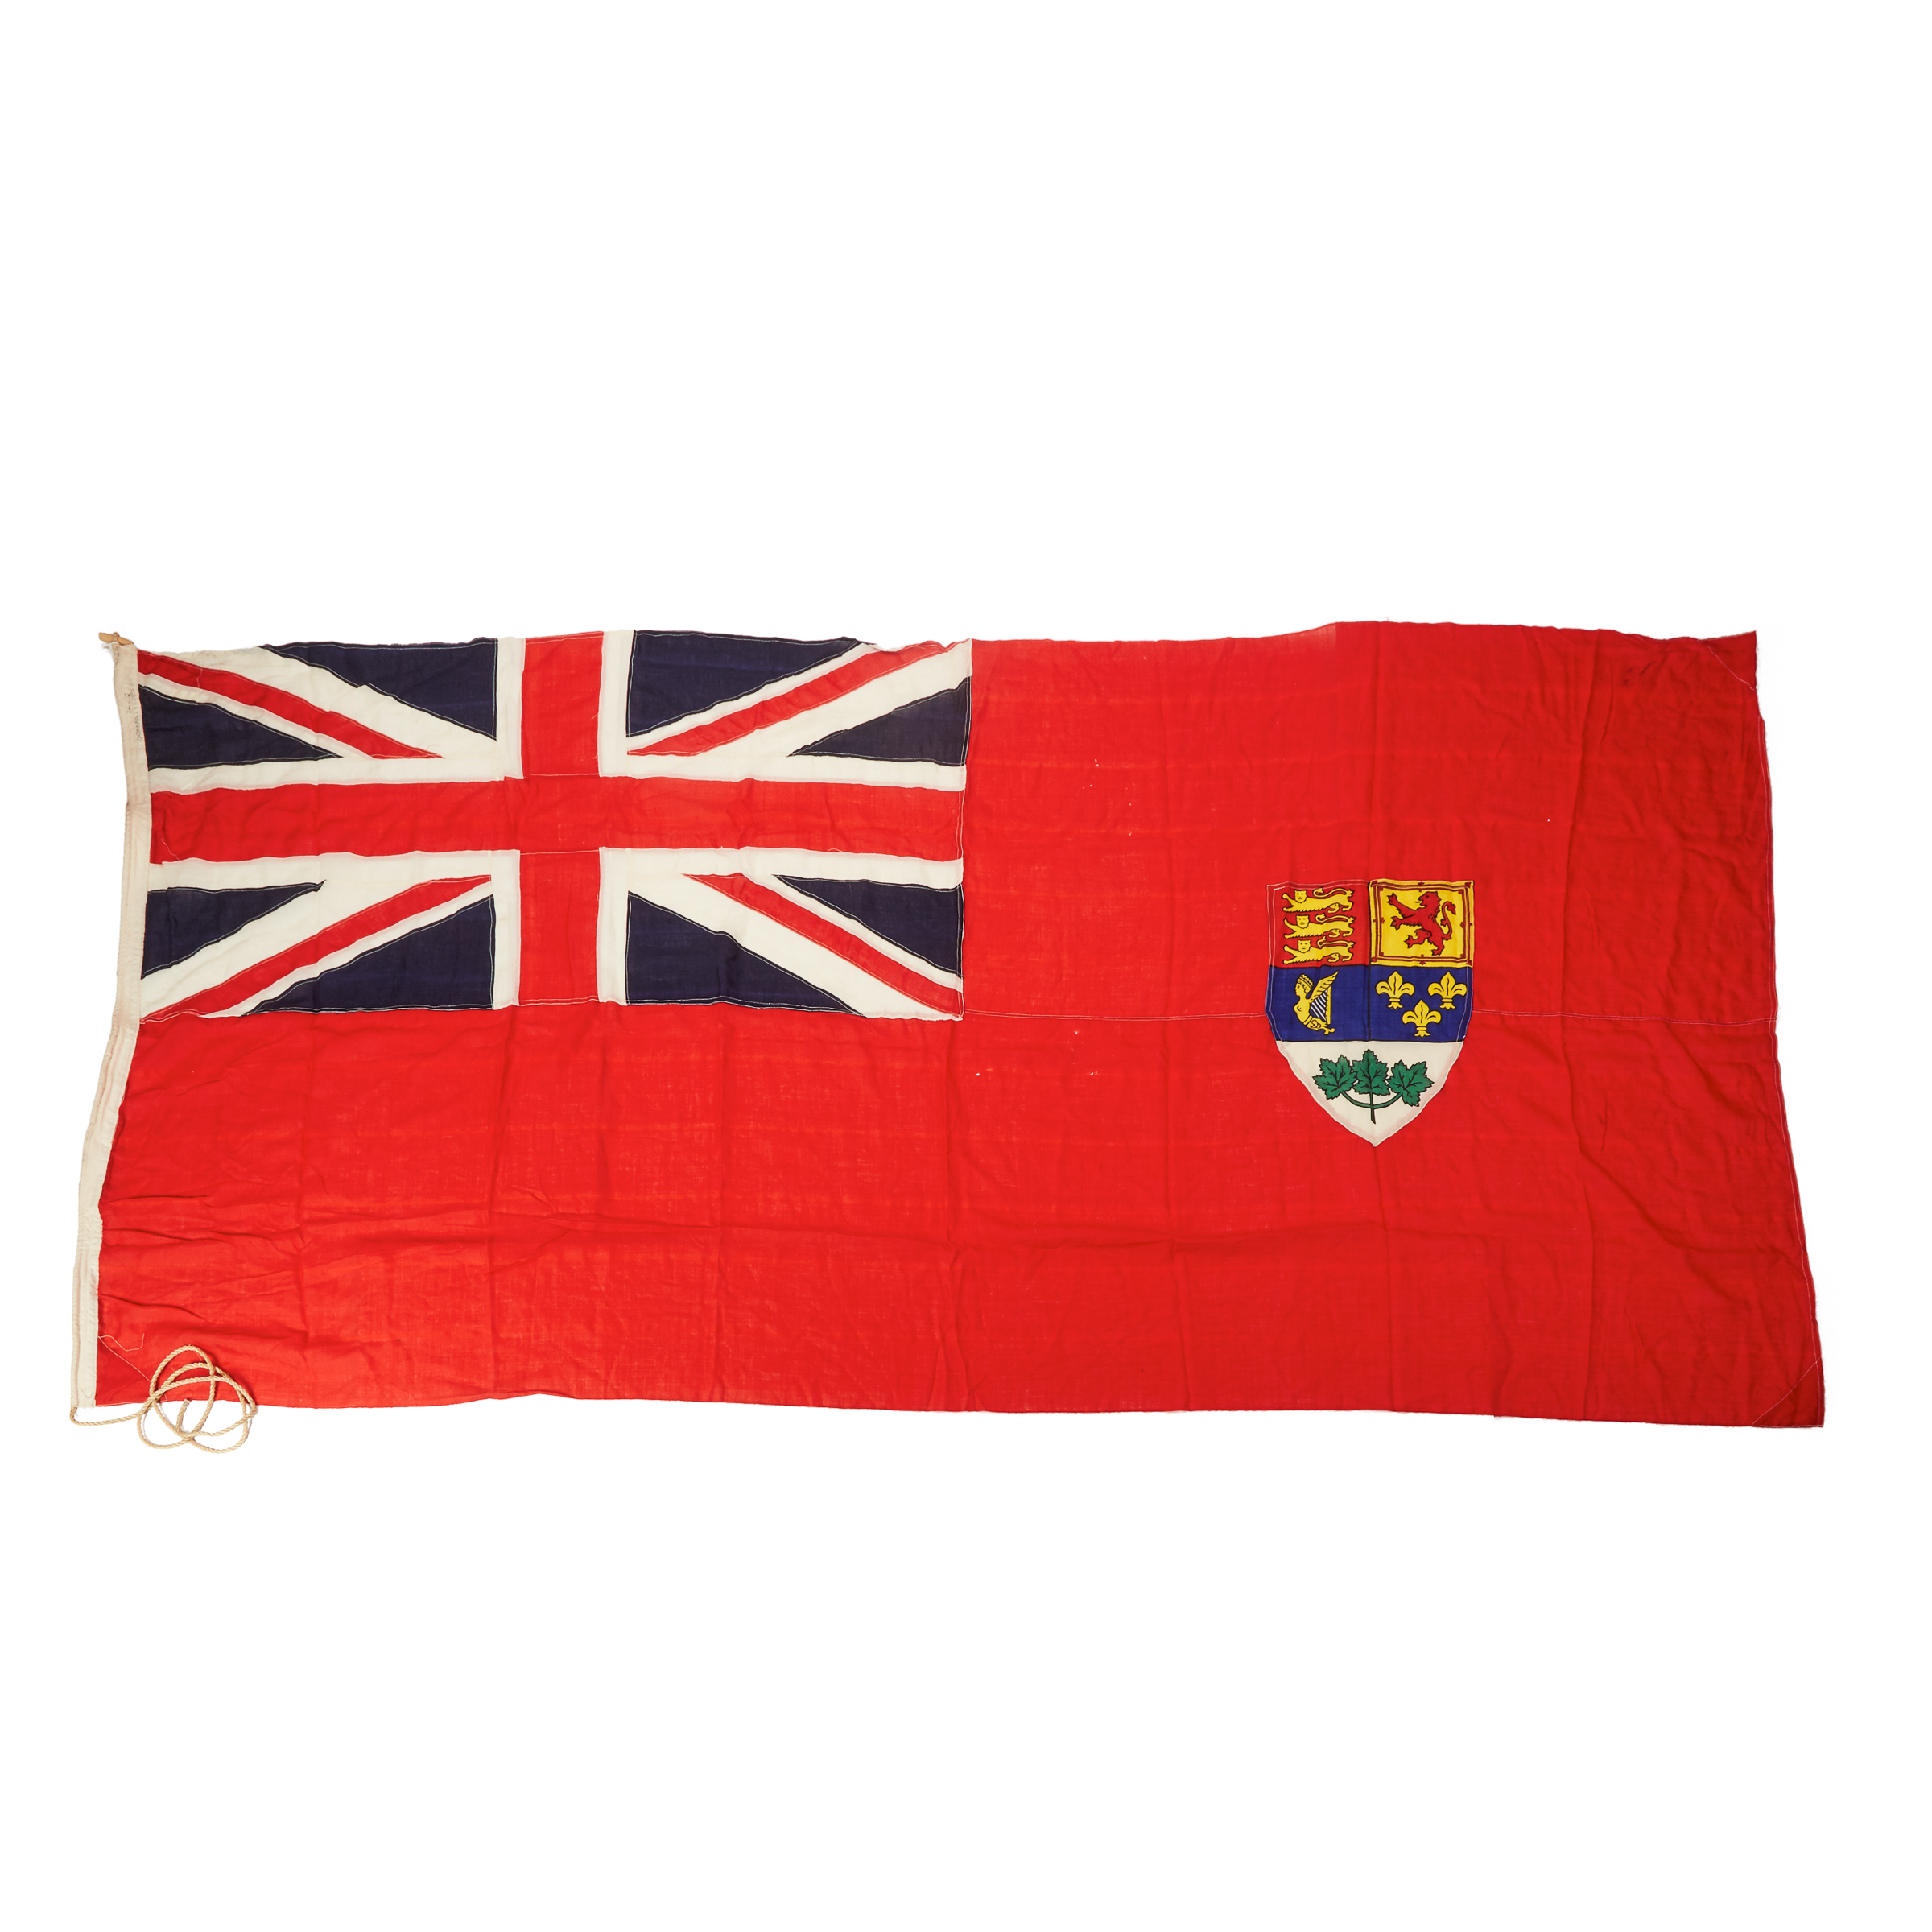 Royal Union Flag (Union Jack), mid 20th century